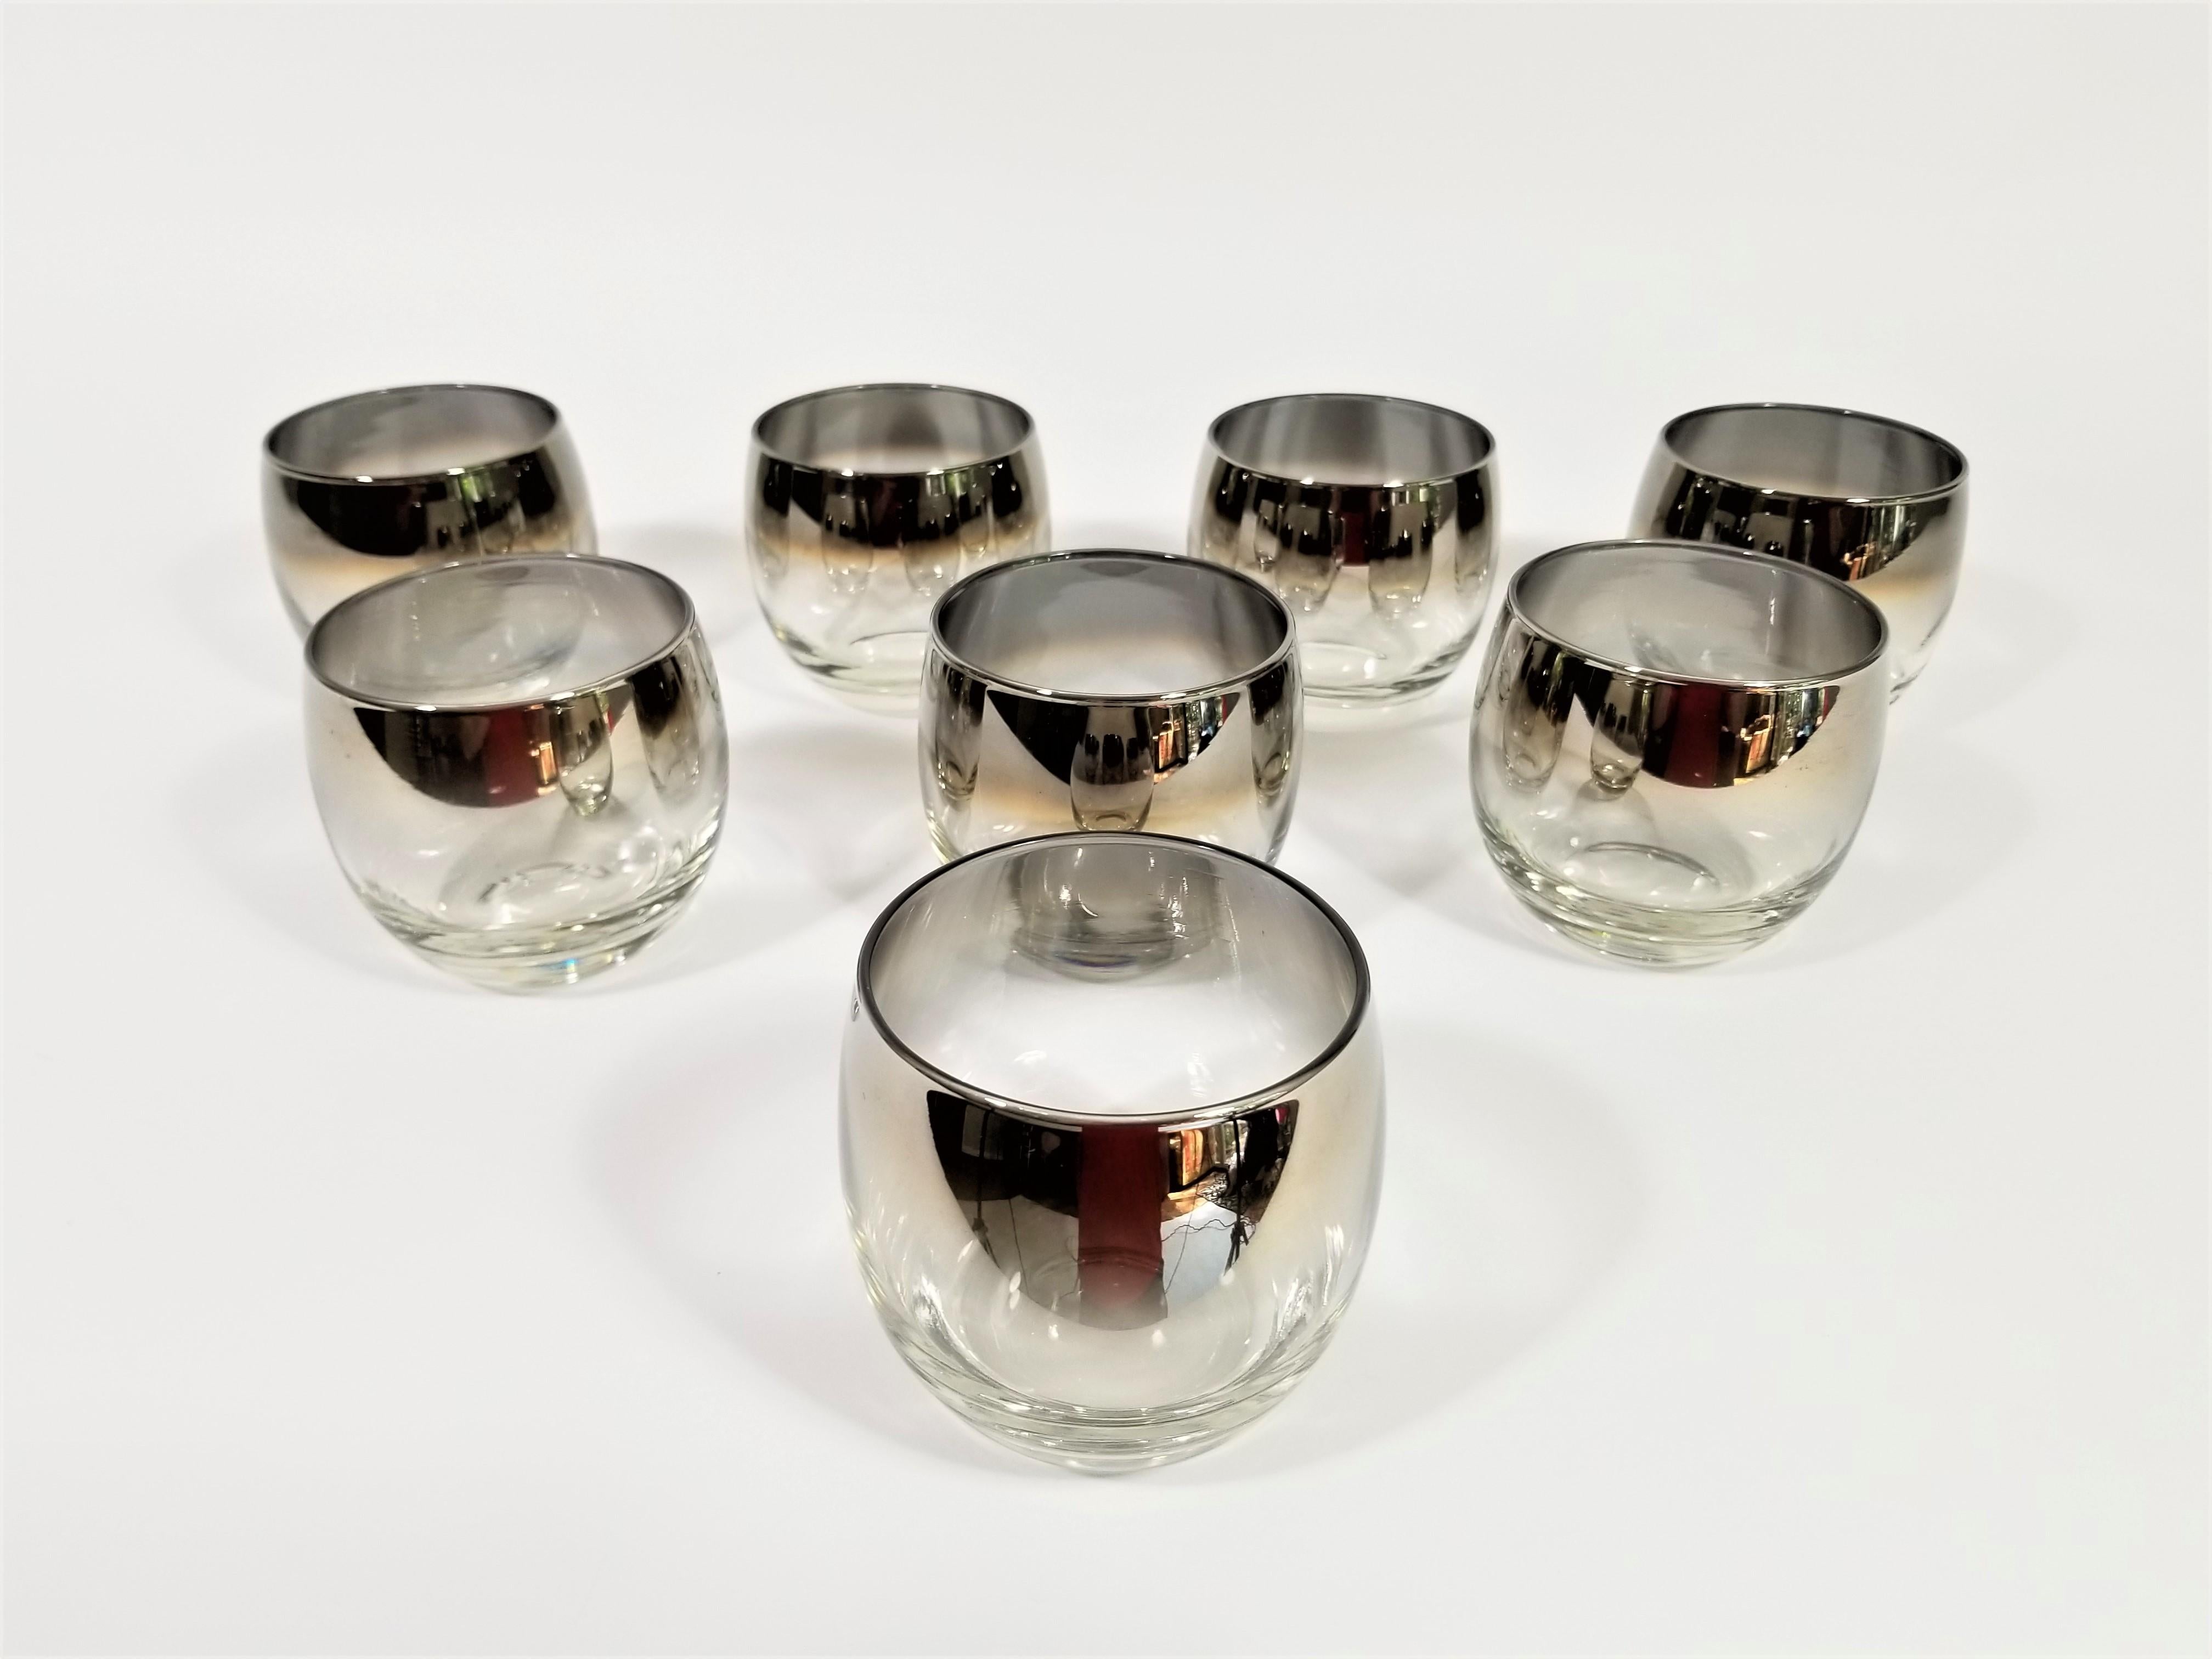 North American Dorothy Thorpe Midcentury Silver Glassware Set of 8